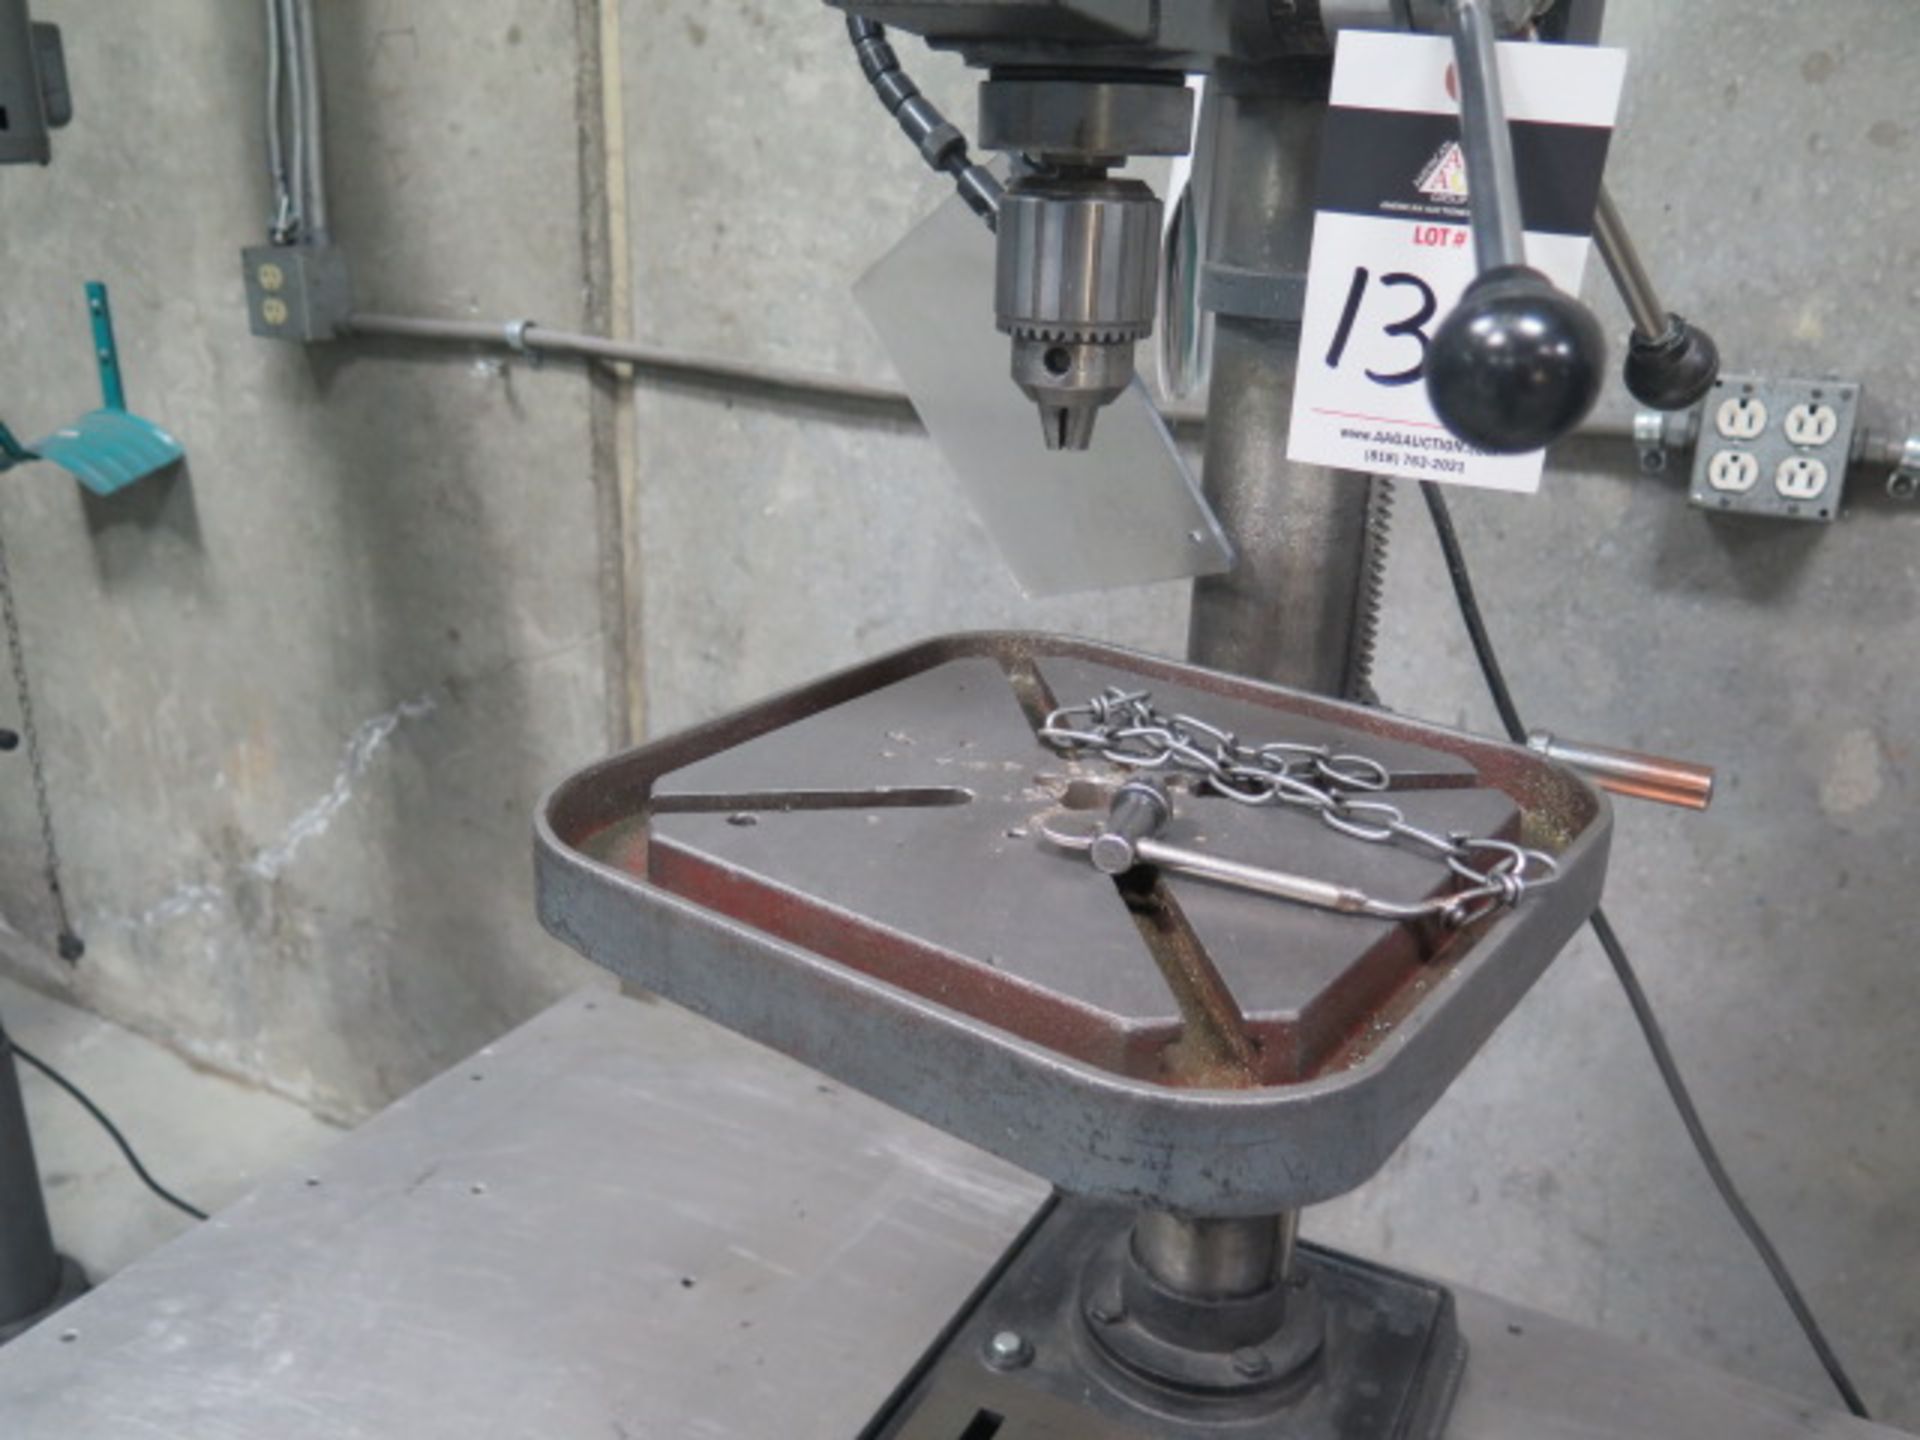 Dayton 5Z146C Bench Model Drill Press - Image 3 of 4